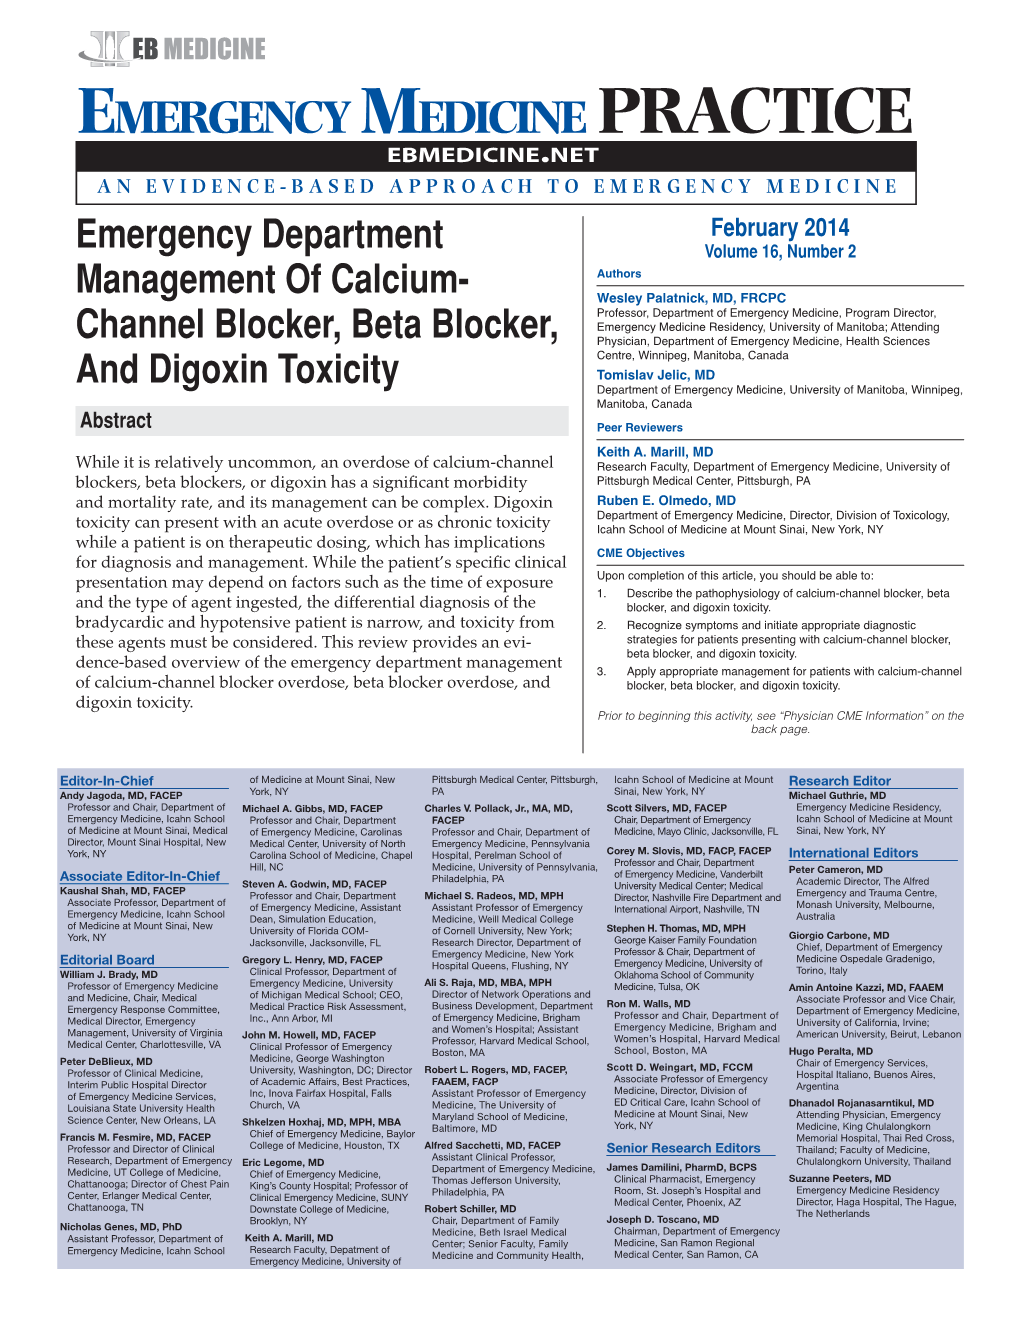 Channel Blocker, Beta Blocker, and Digoxin Toxicity